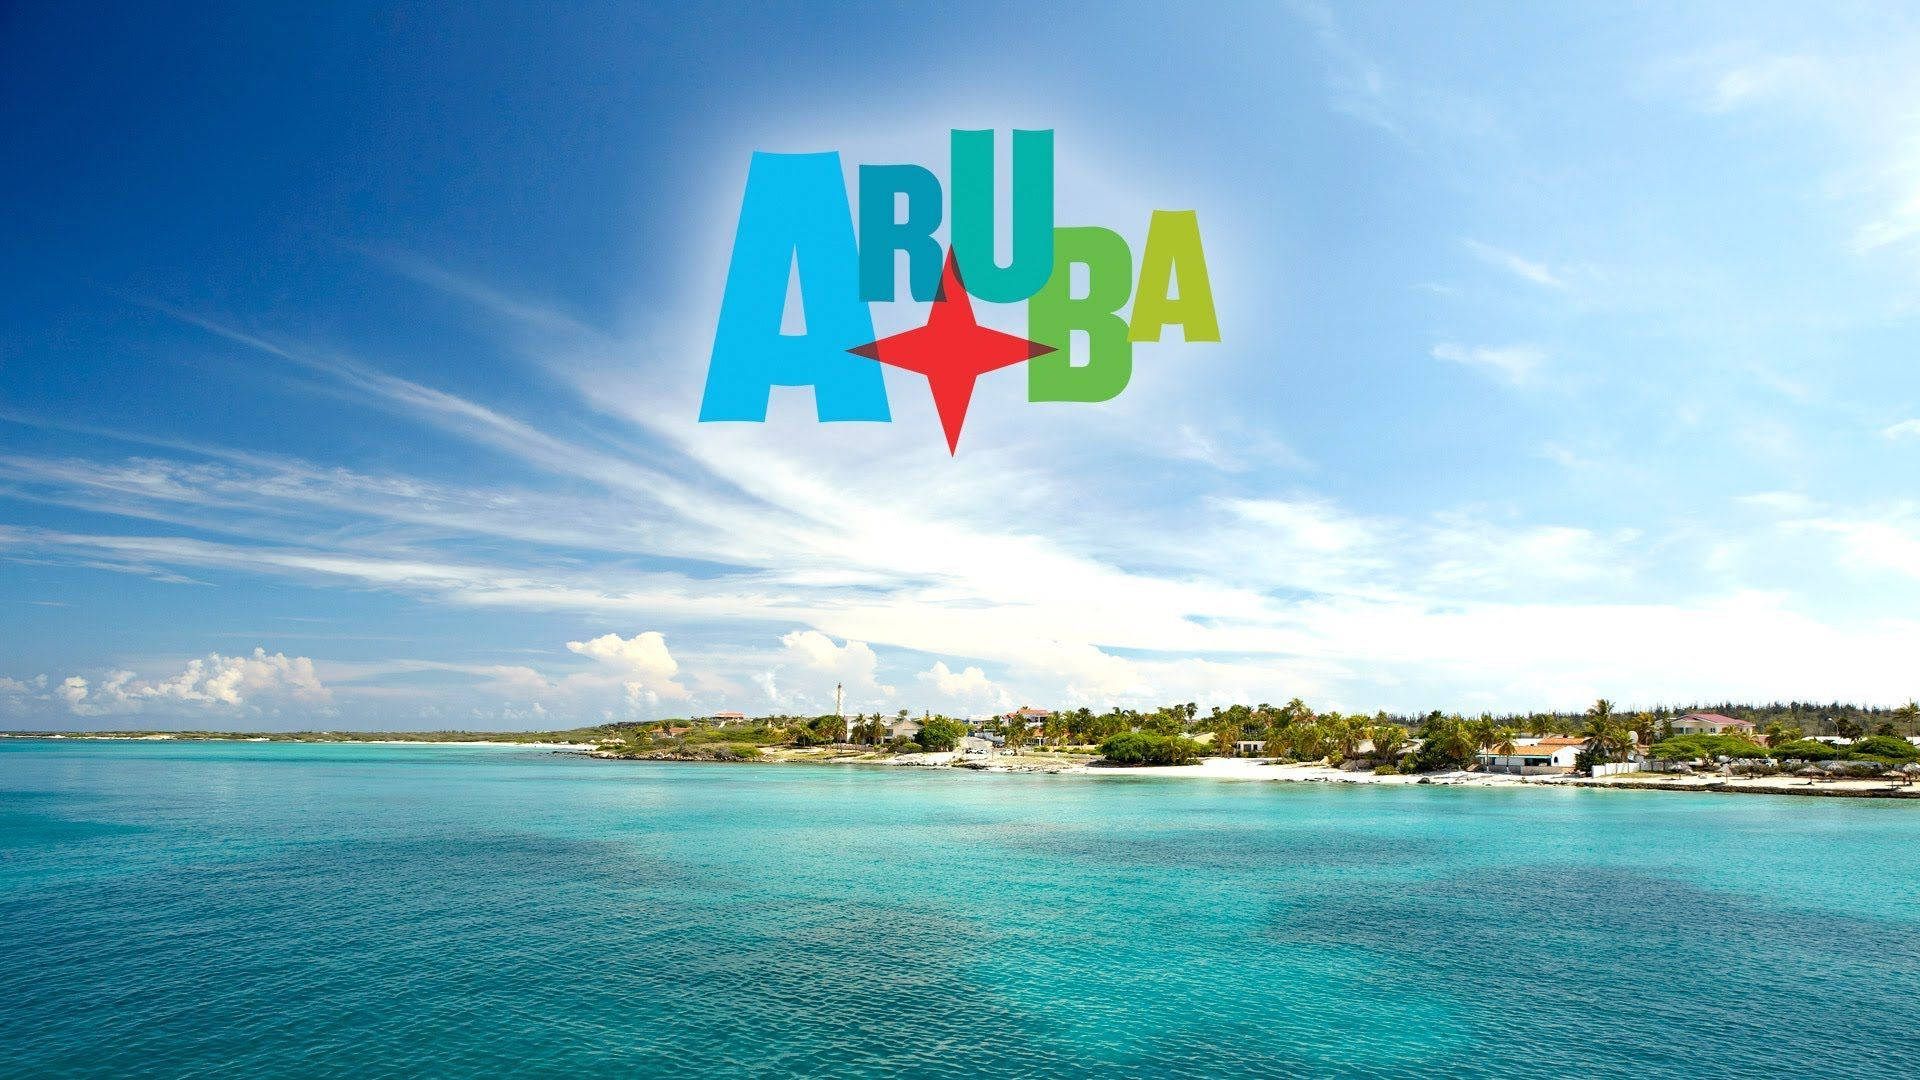 Aruba Beach Poster Wallpaper